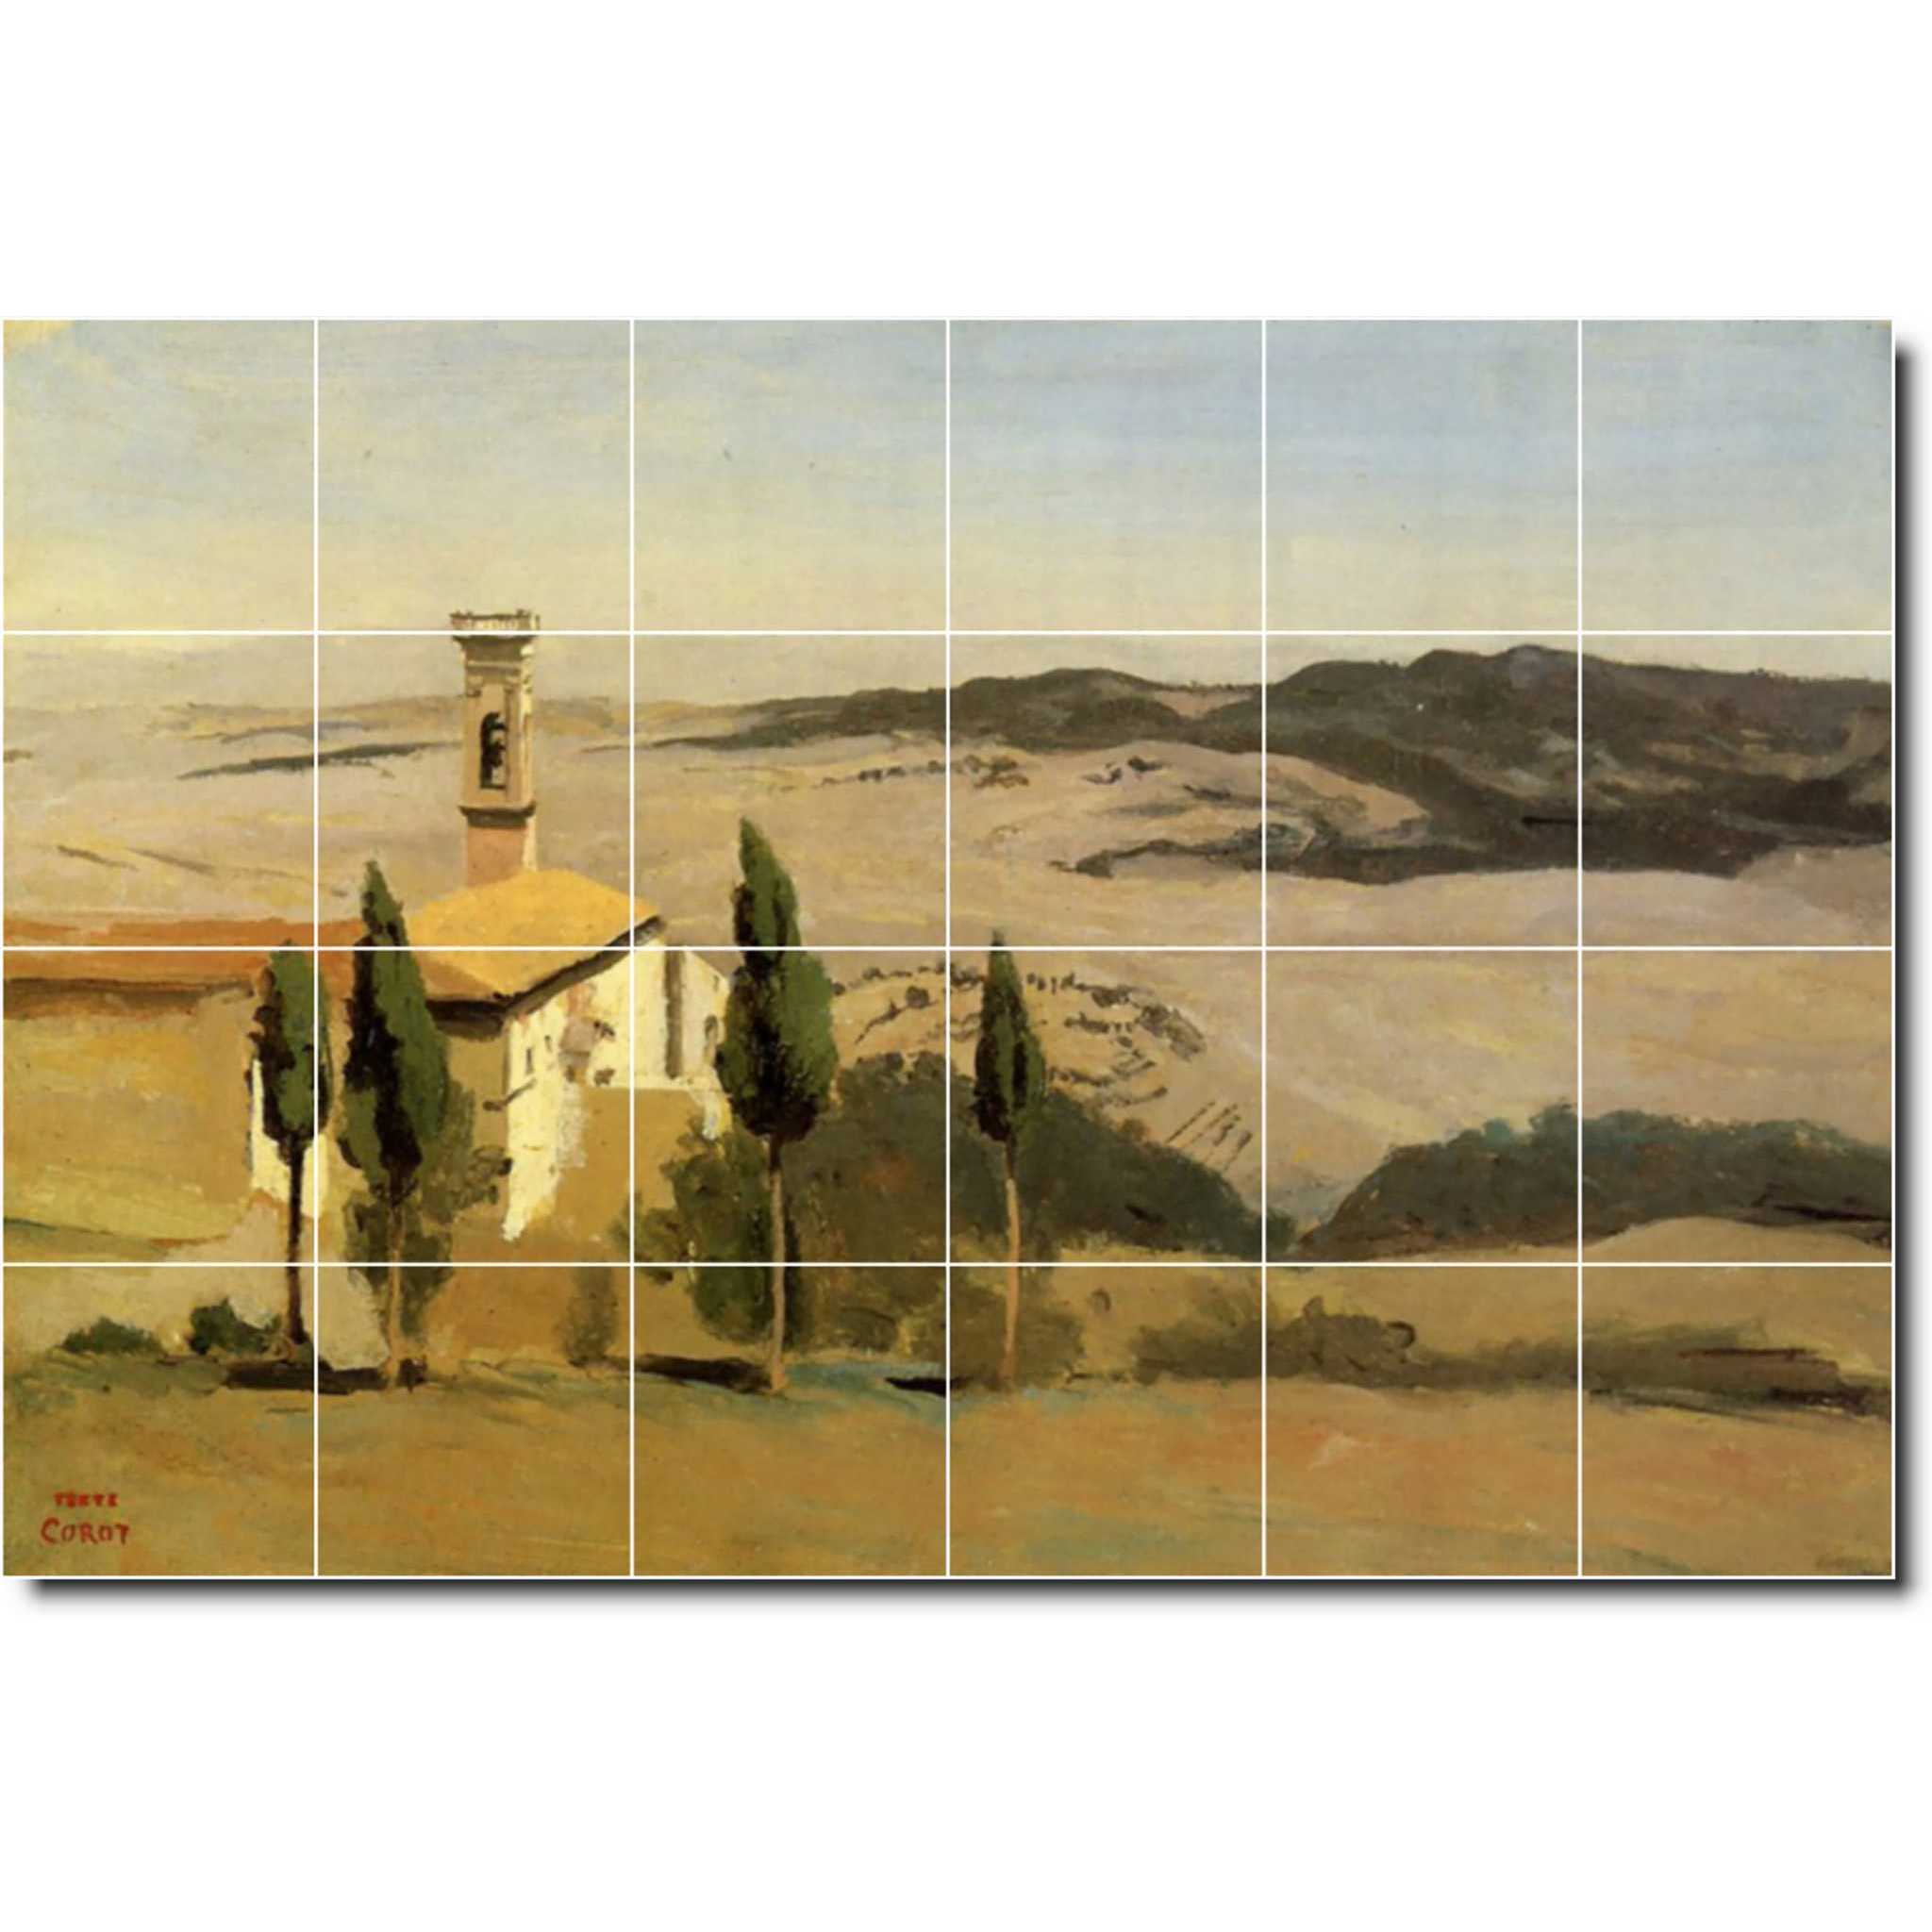 jean corot landscape painting ceramic tile mural p02154